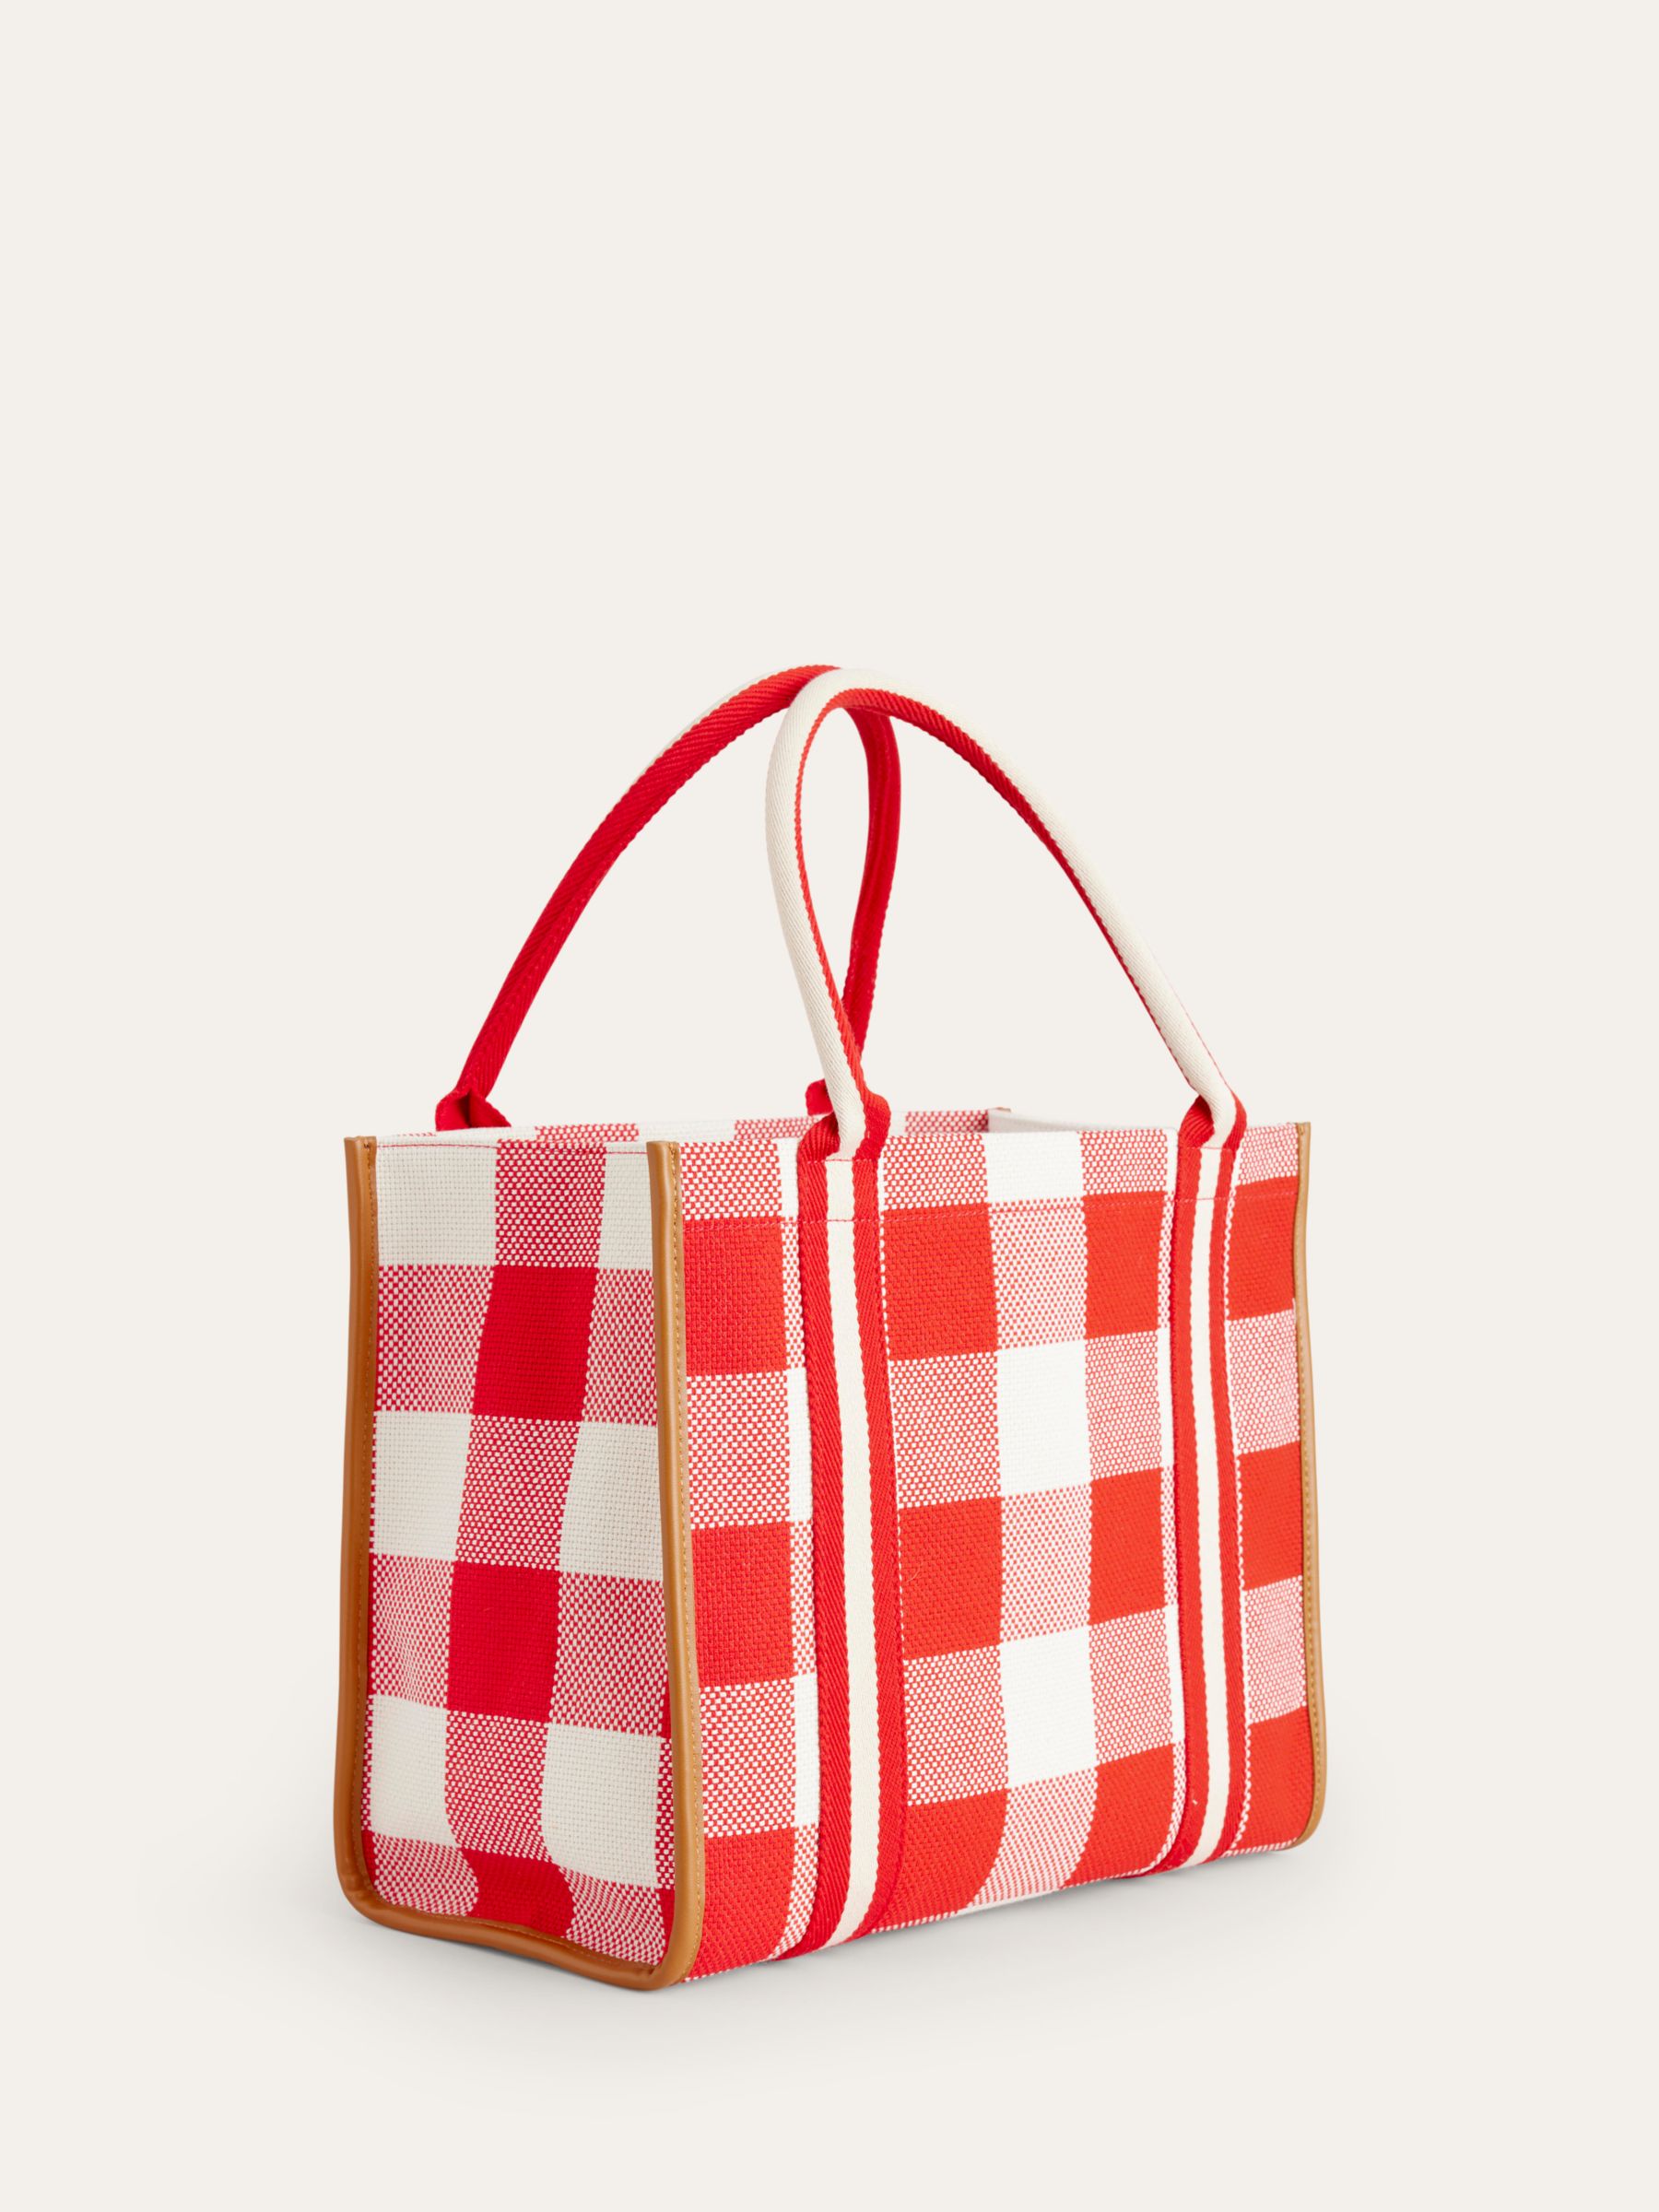 Boden Tilda Check Tote Bag, Red/Multi, One Size